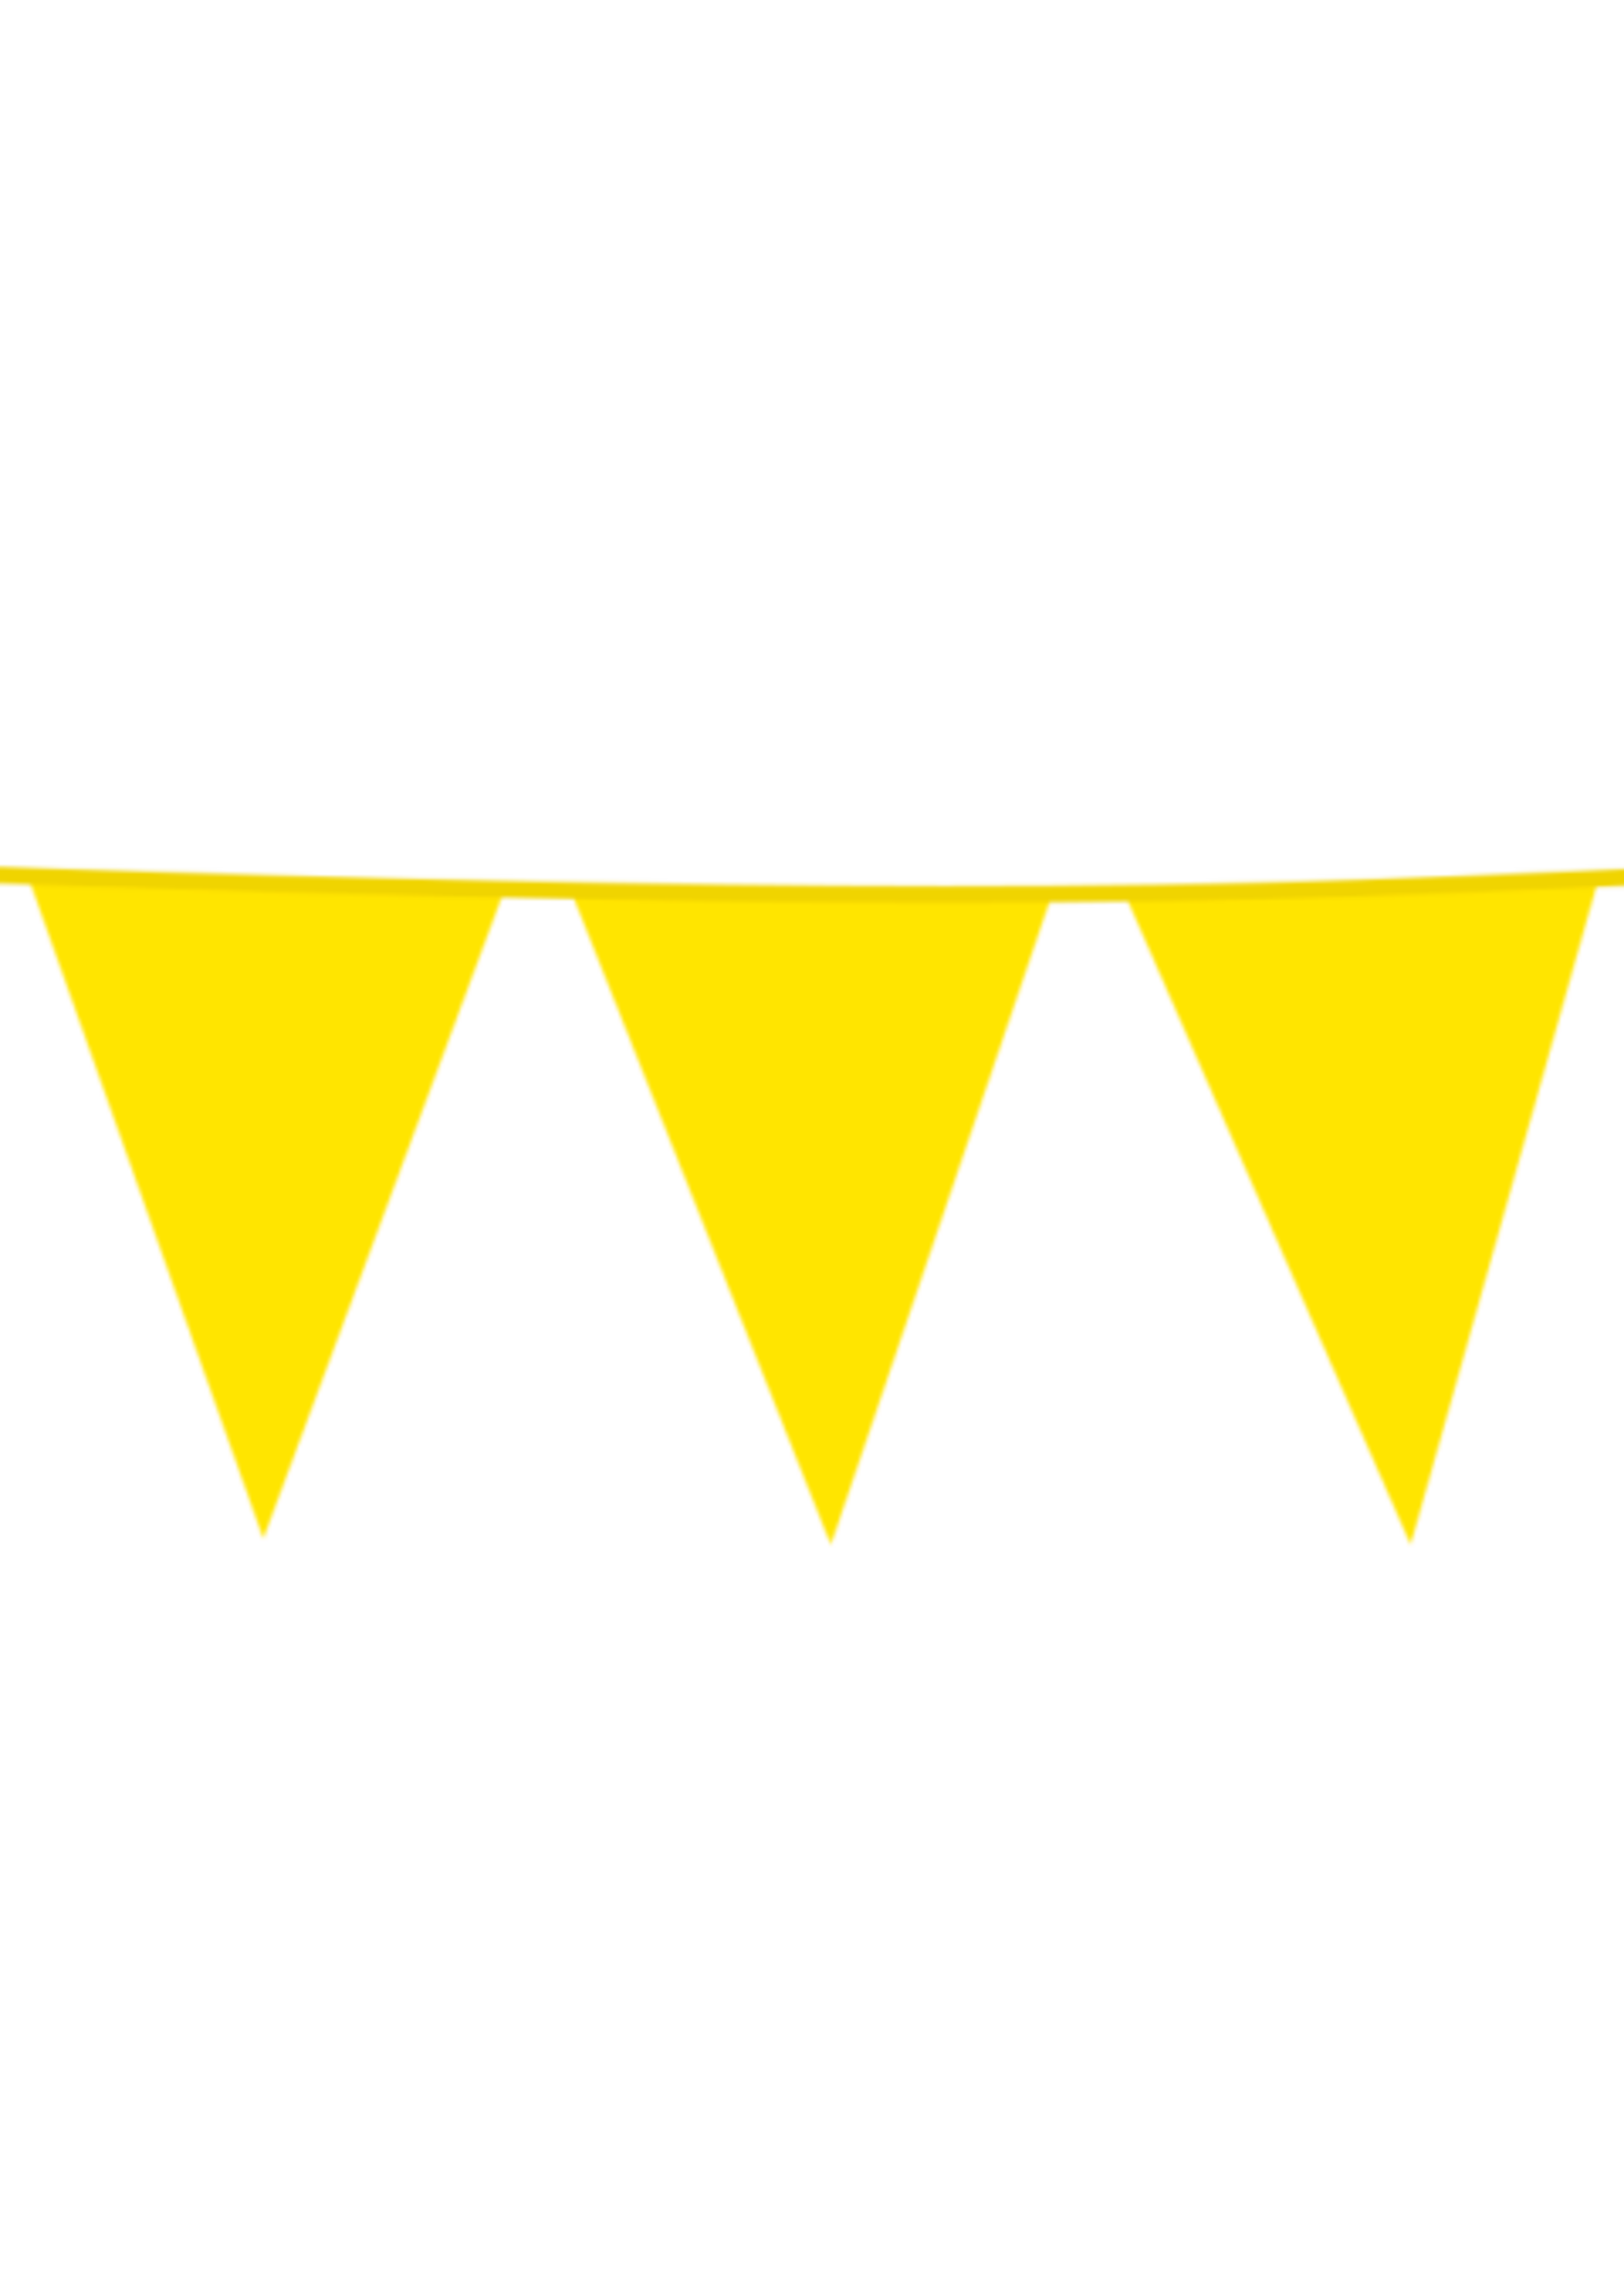 Feestkleding Breda Vlaggenlijn Giga geel 30x45 cm